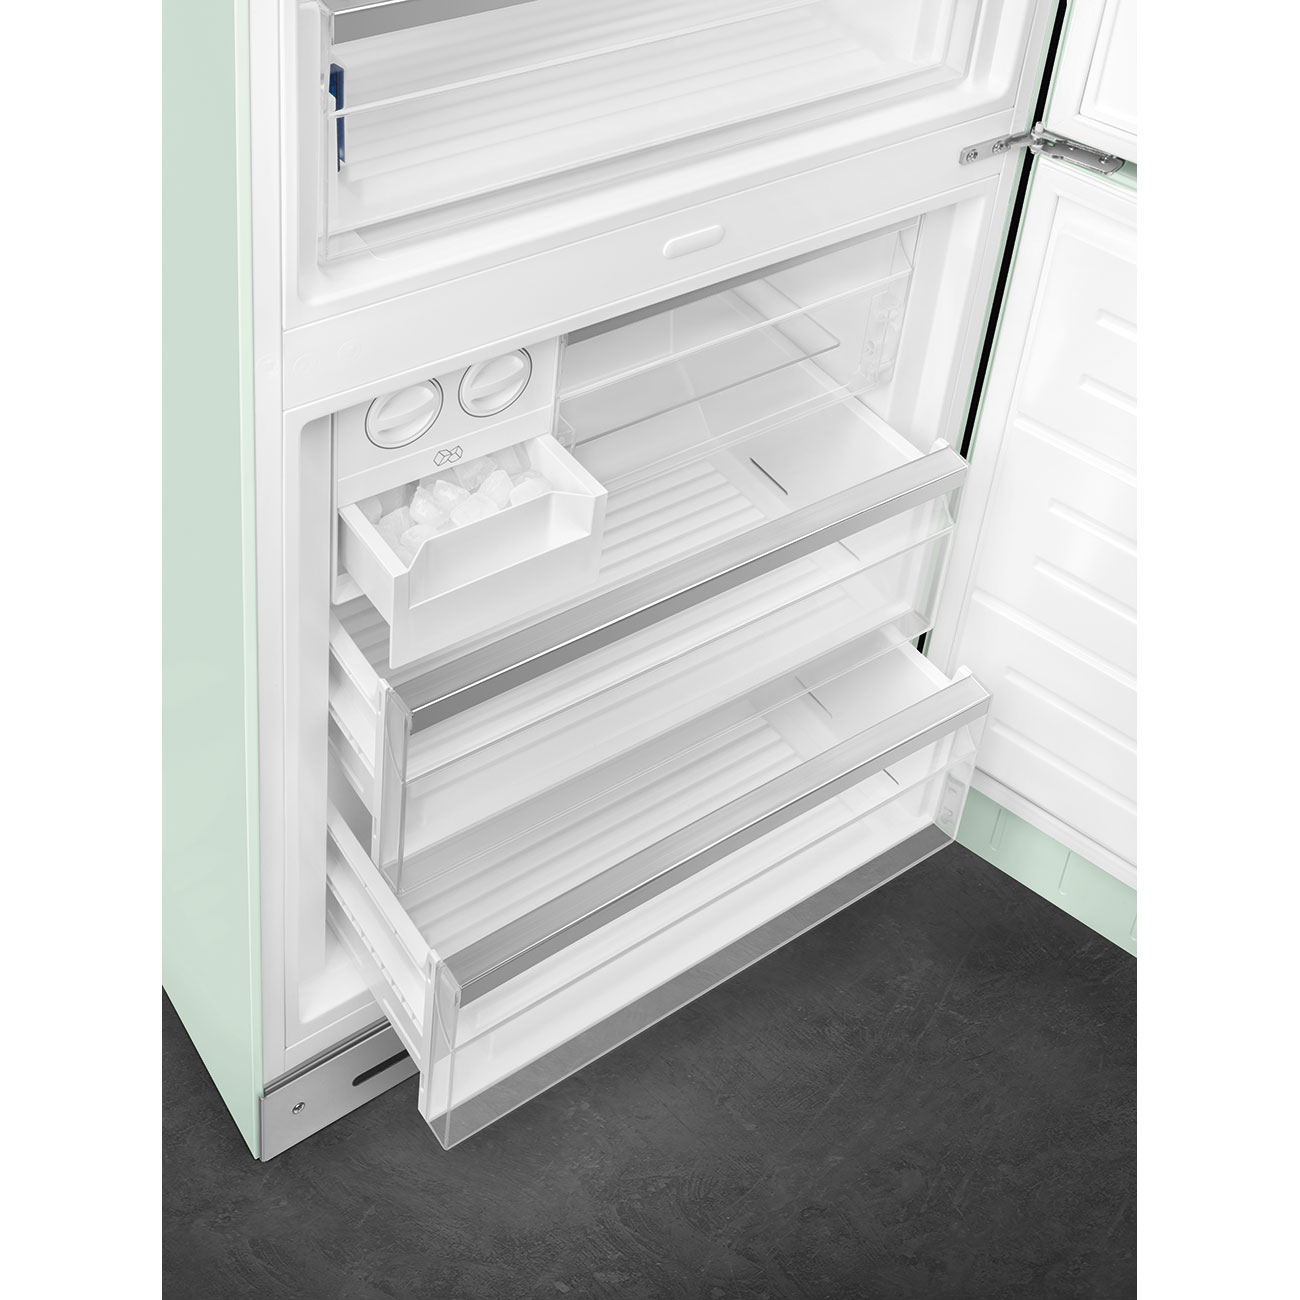 Pastel green refrigerator - Smeg_10